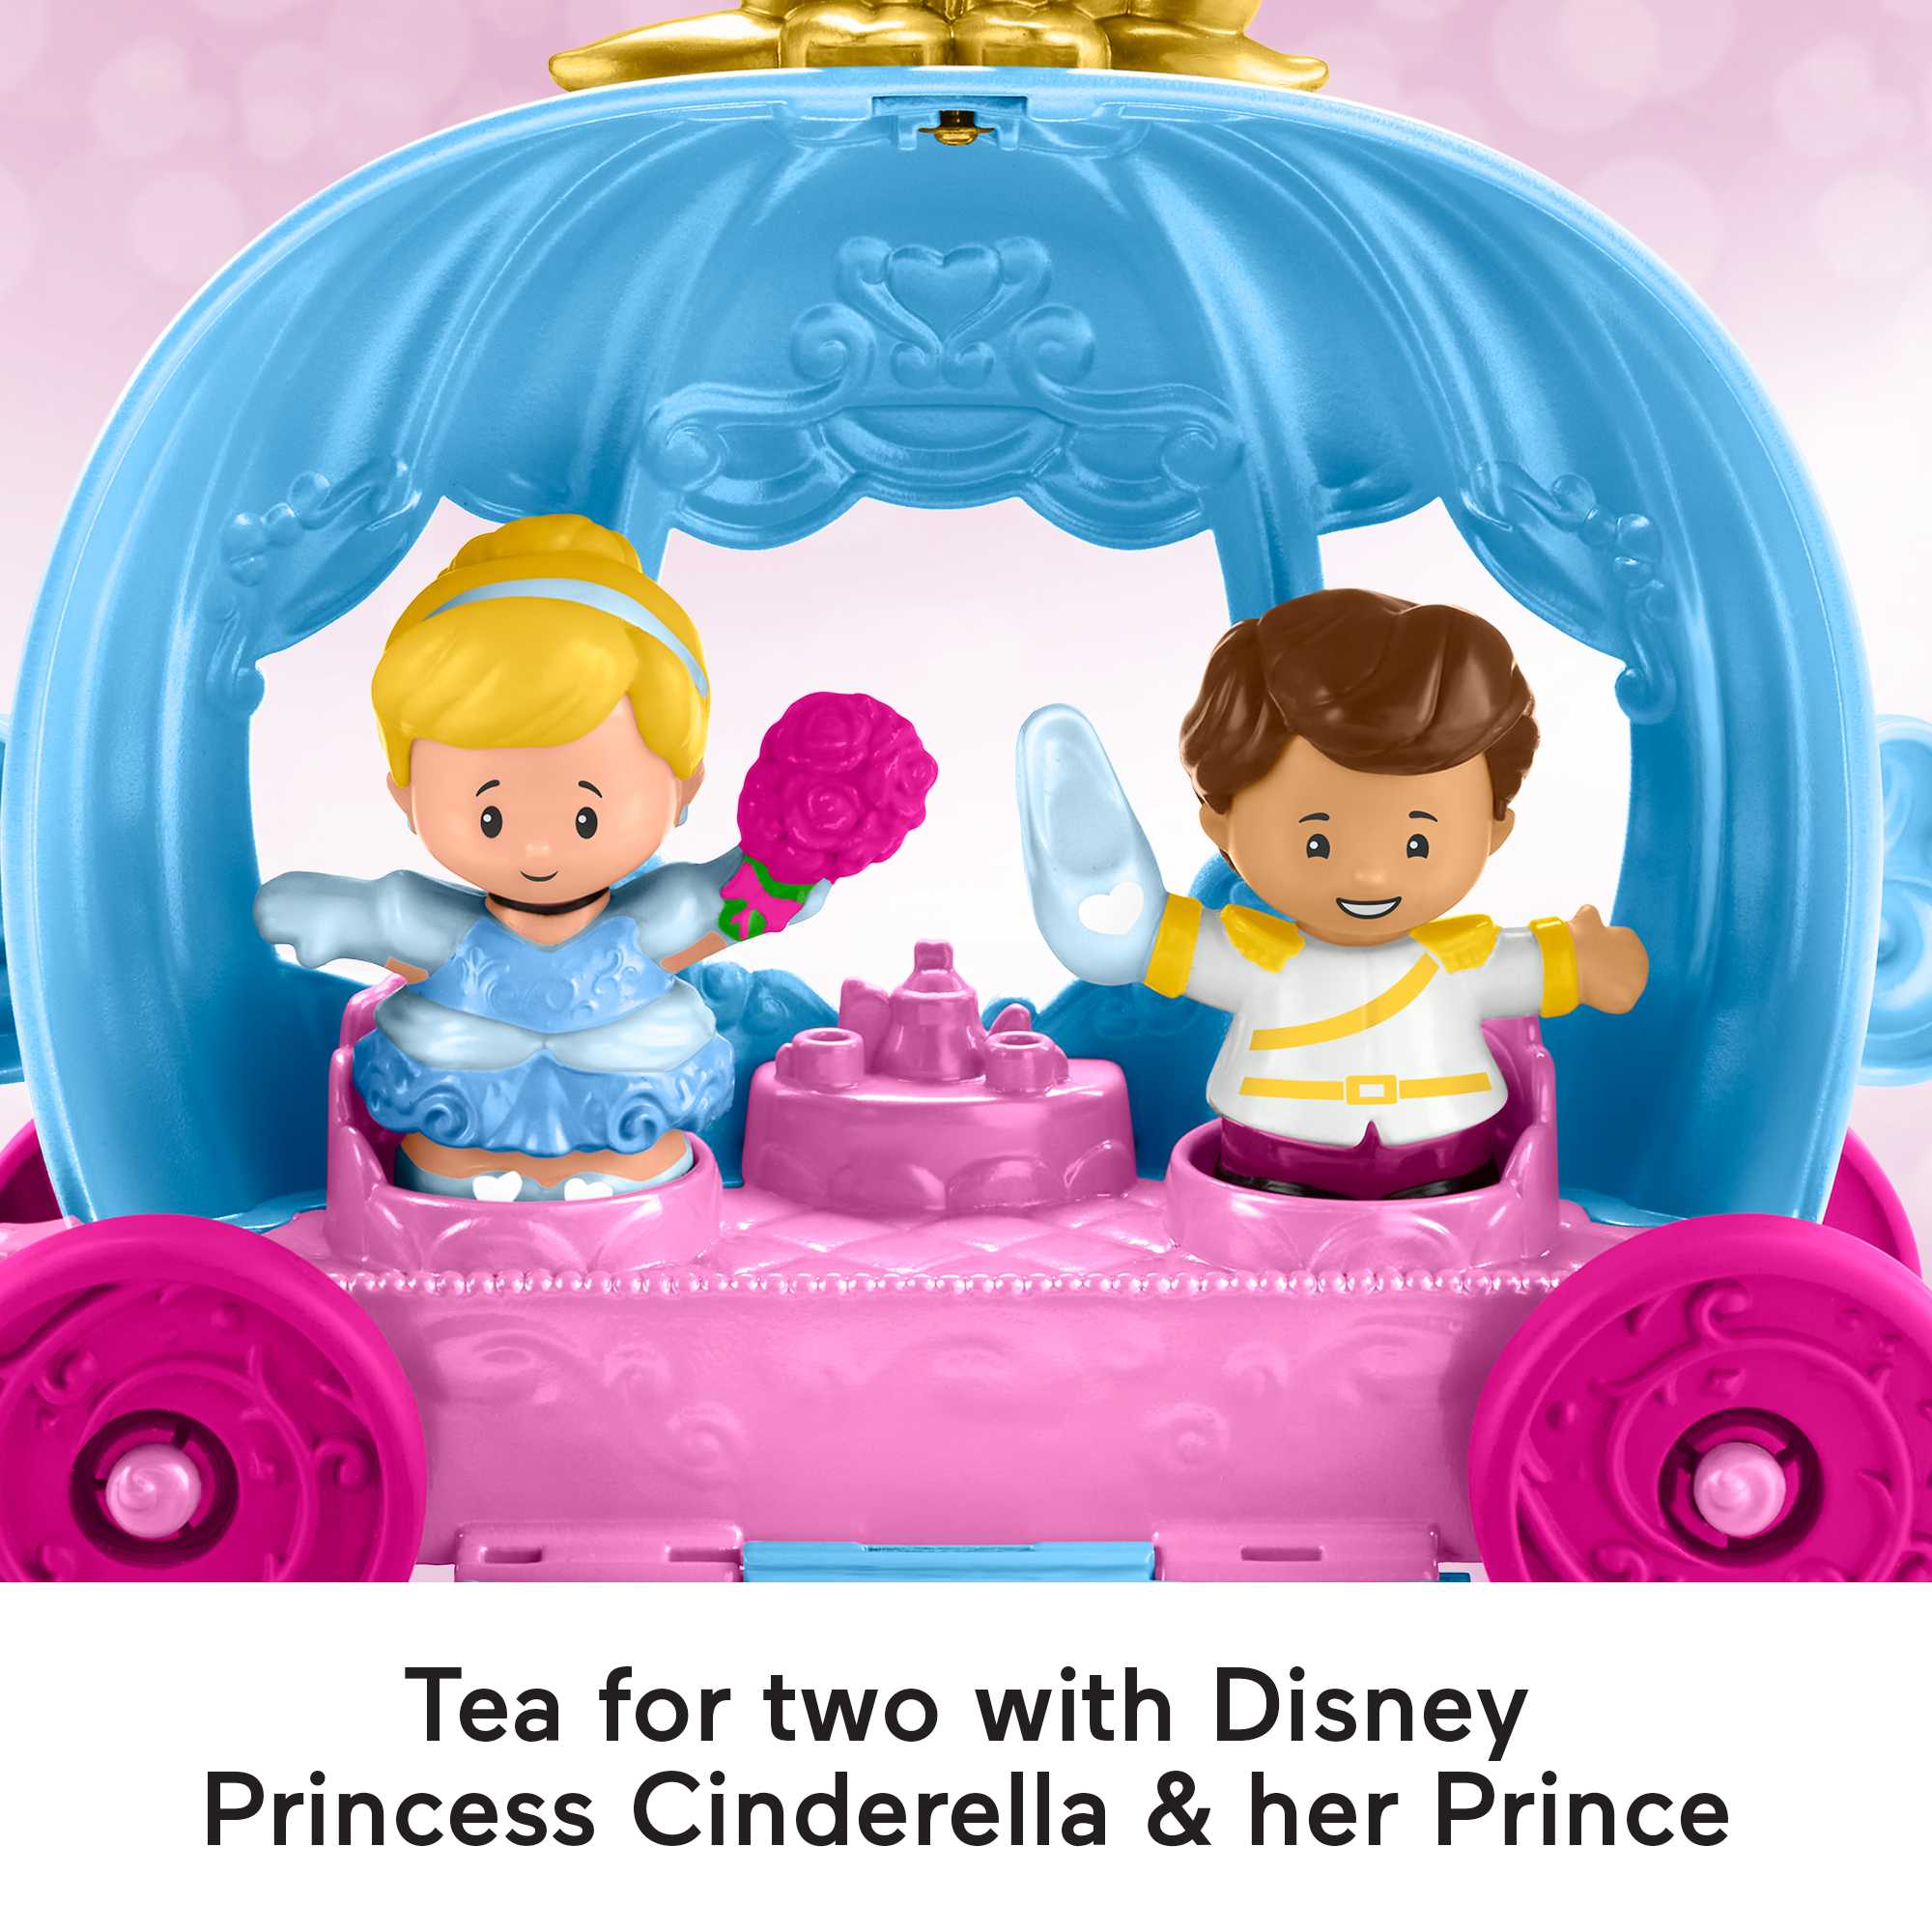 Fisher Price Little People Disney Princess Cinderella & Friends CHP53